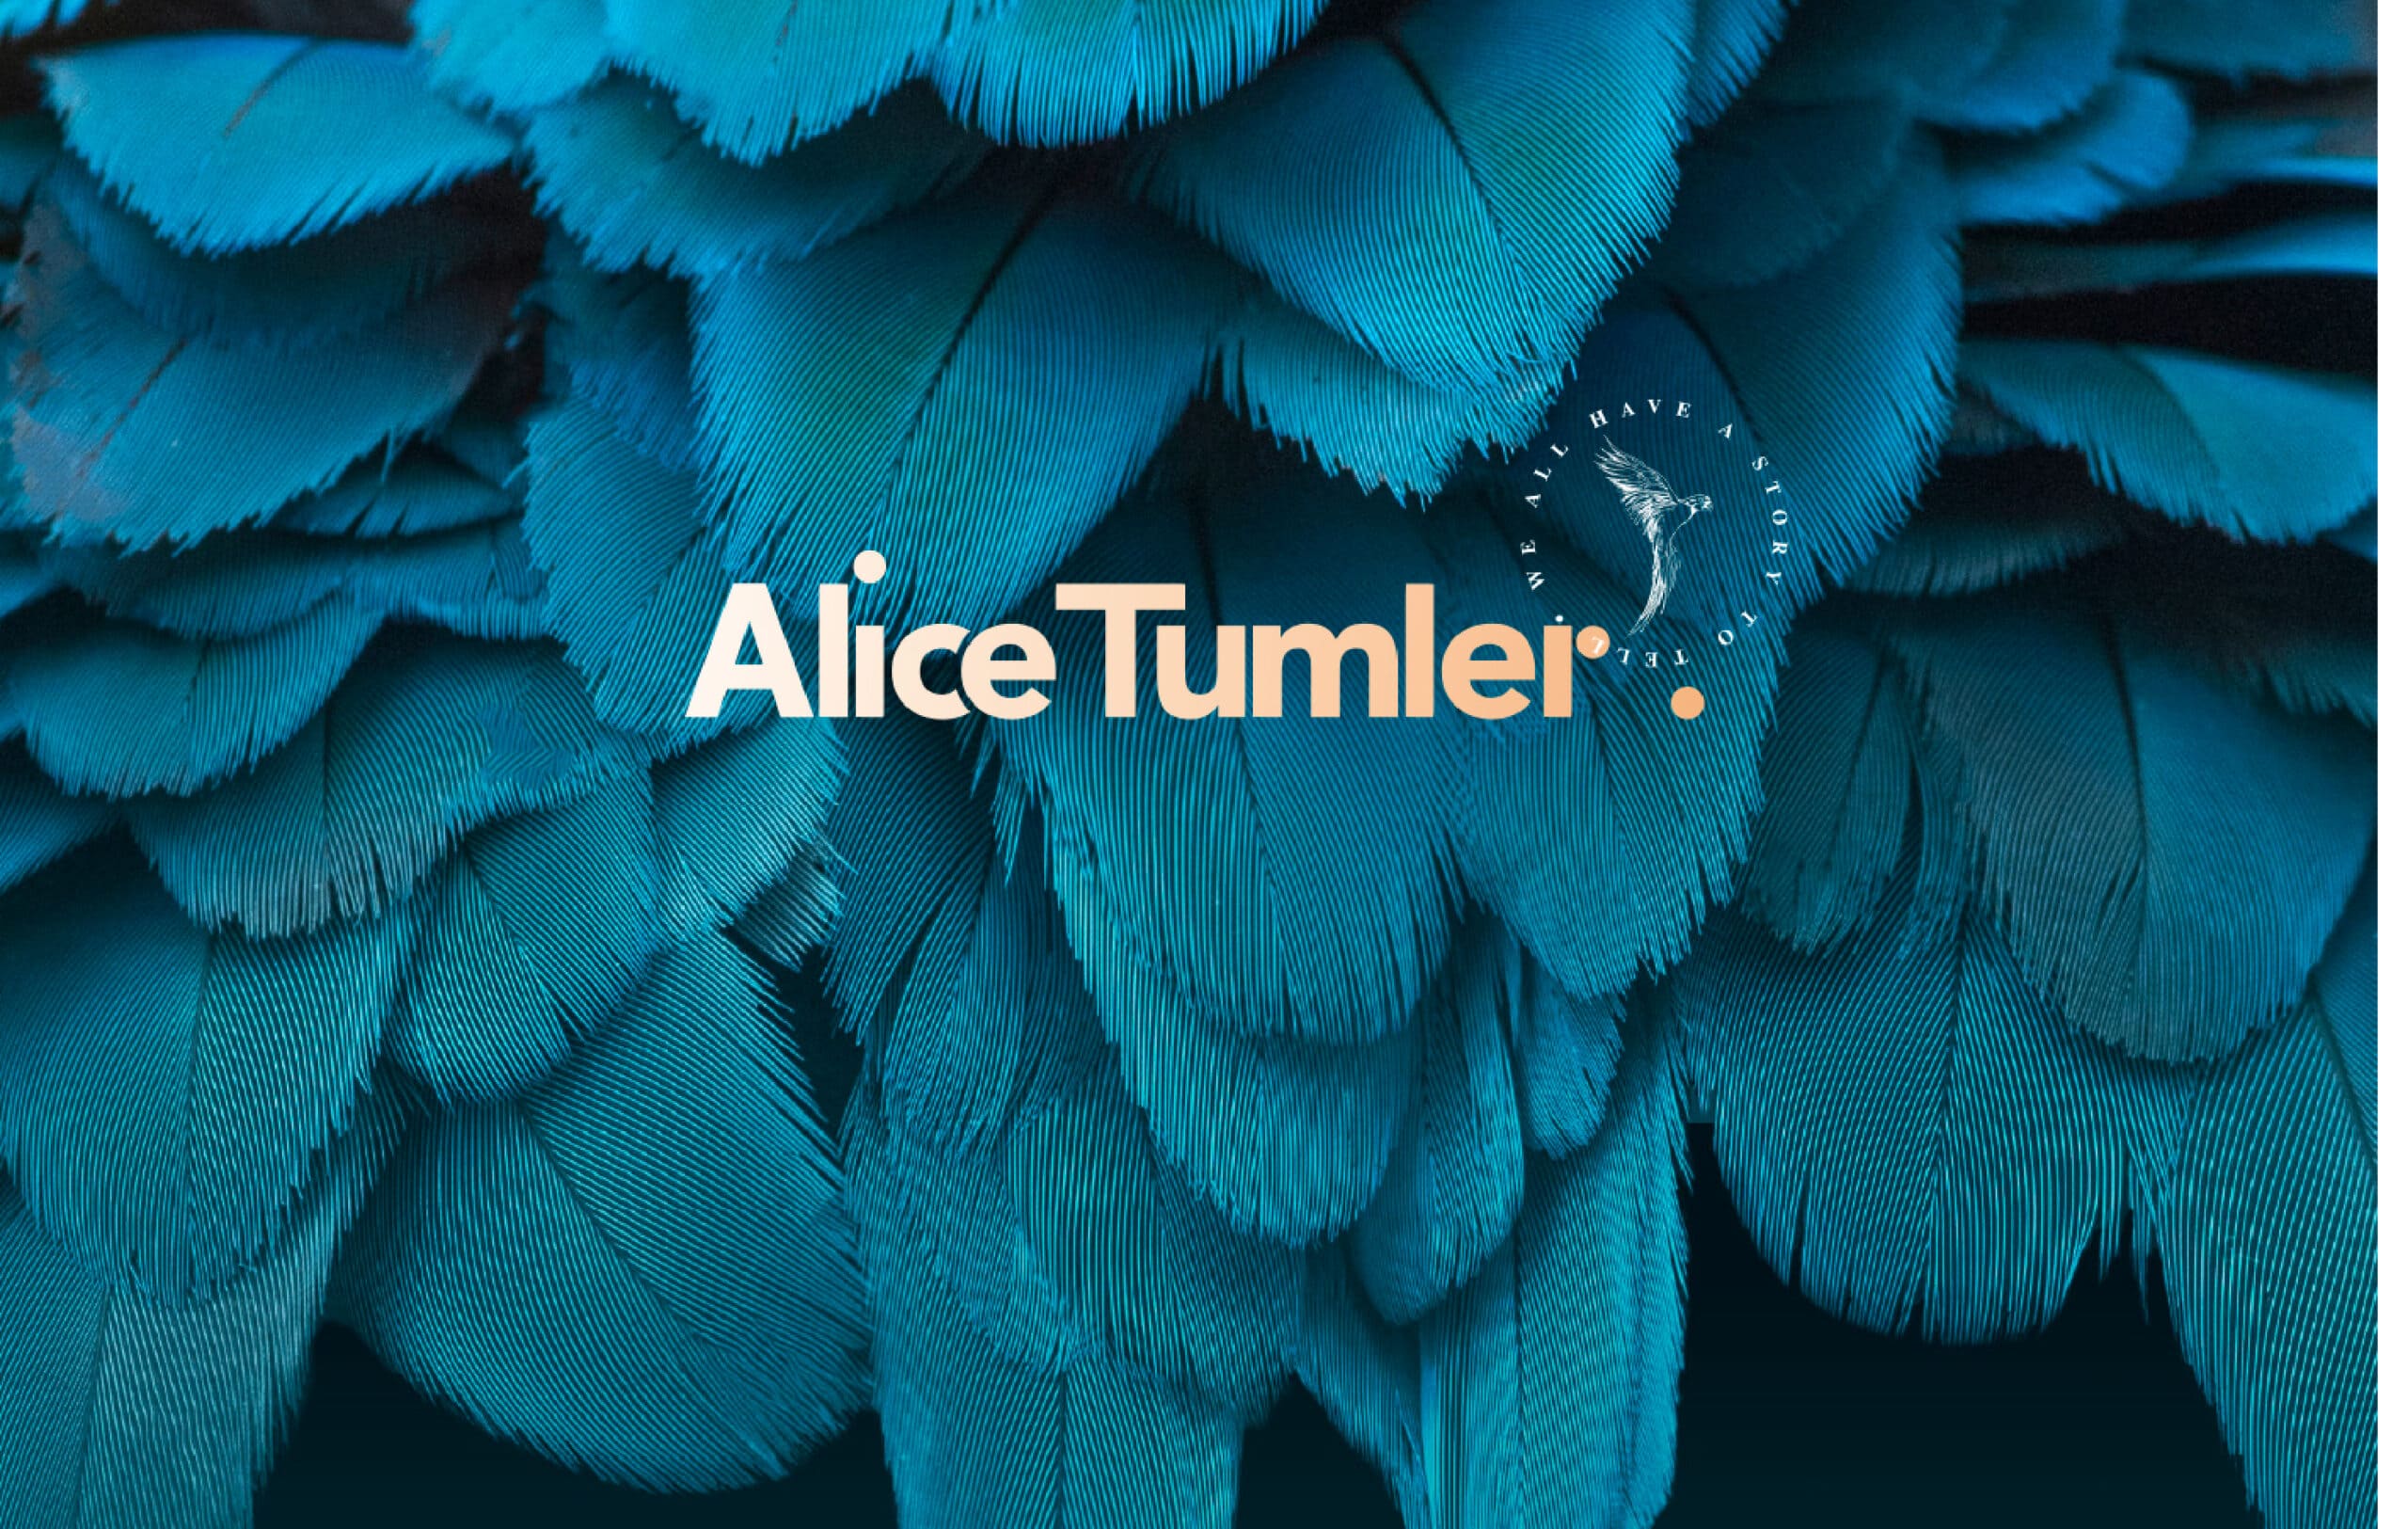 Alice Tumler - Almarena Creative